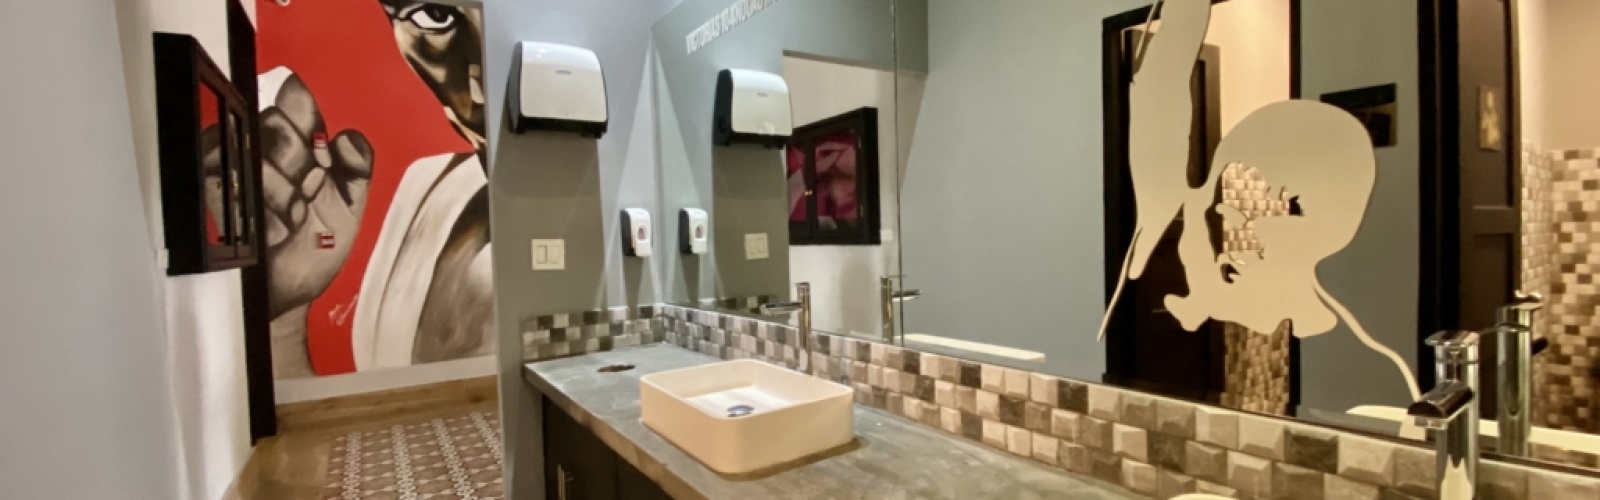 4 BathroomsBathrooms,Local,En Alquiler,1085